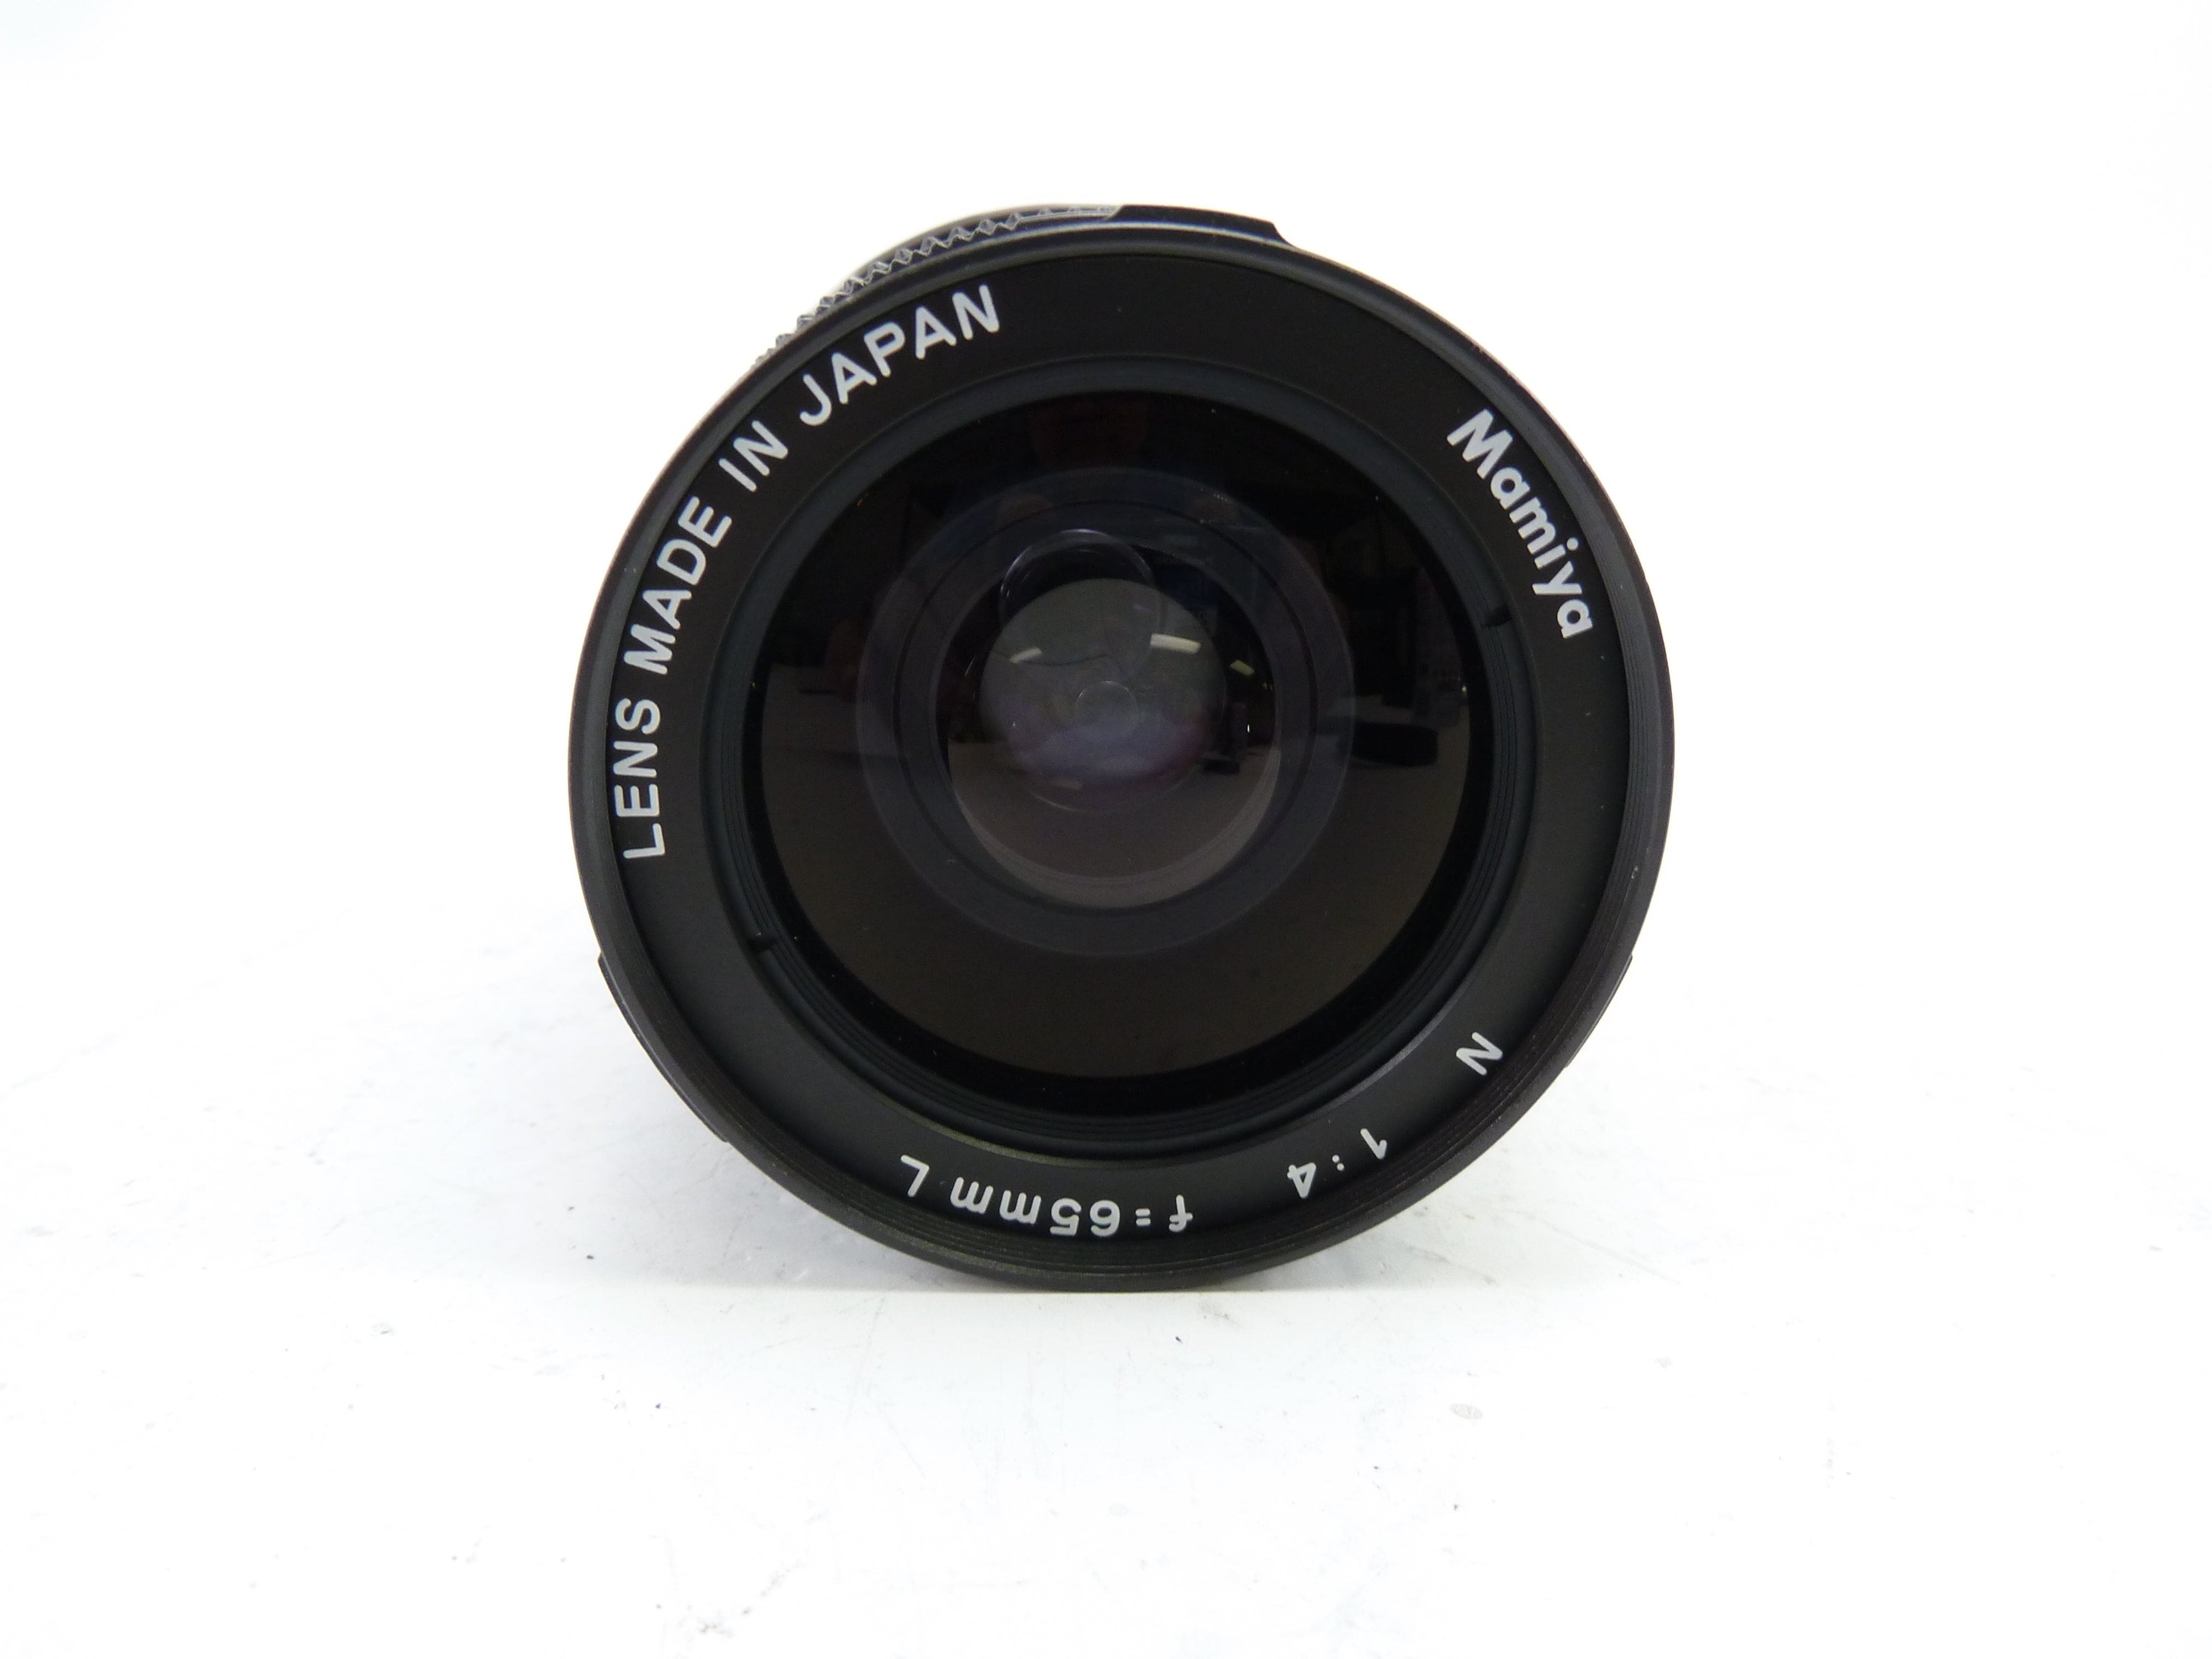 Mamiya 7 N 65MM F4 L Wide Angle Lens with Hood